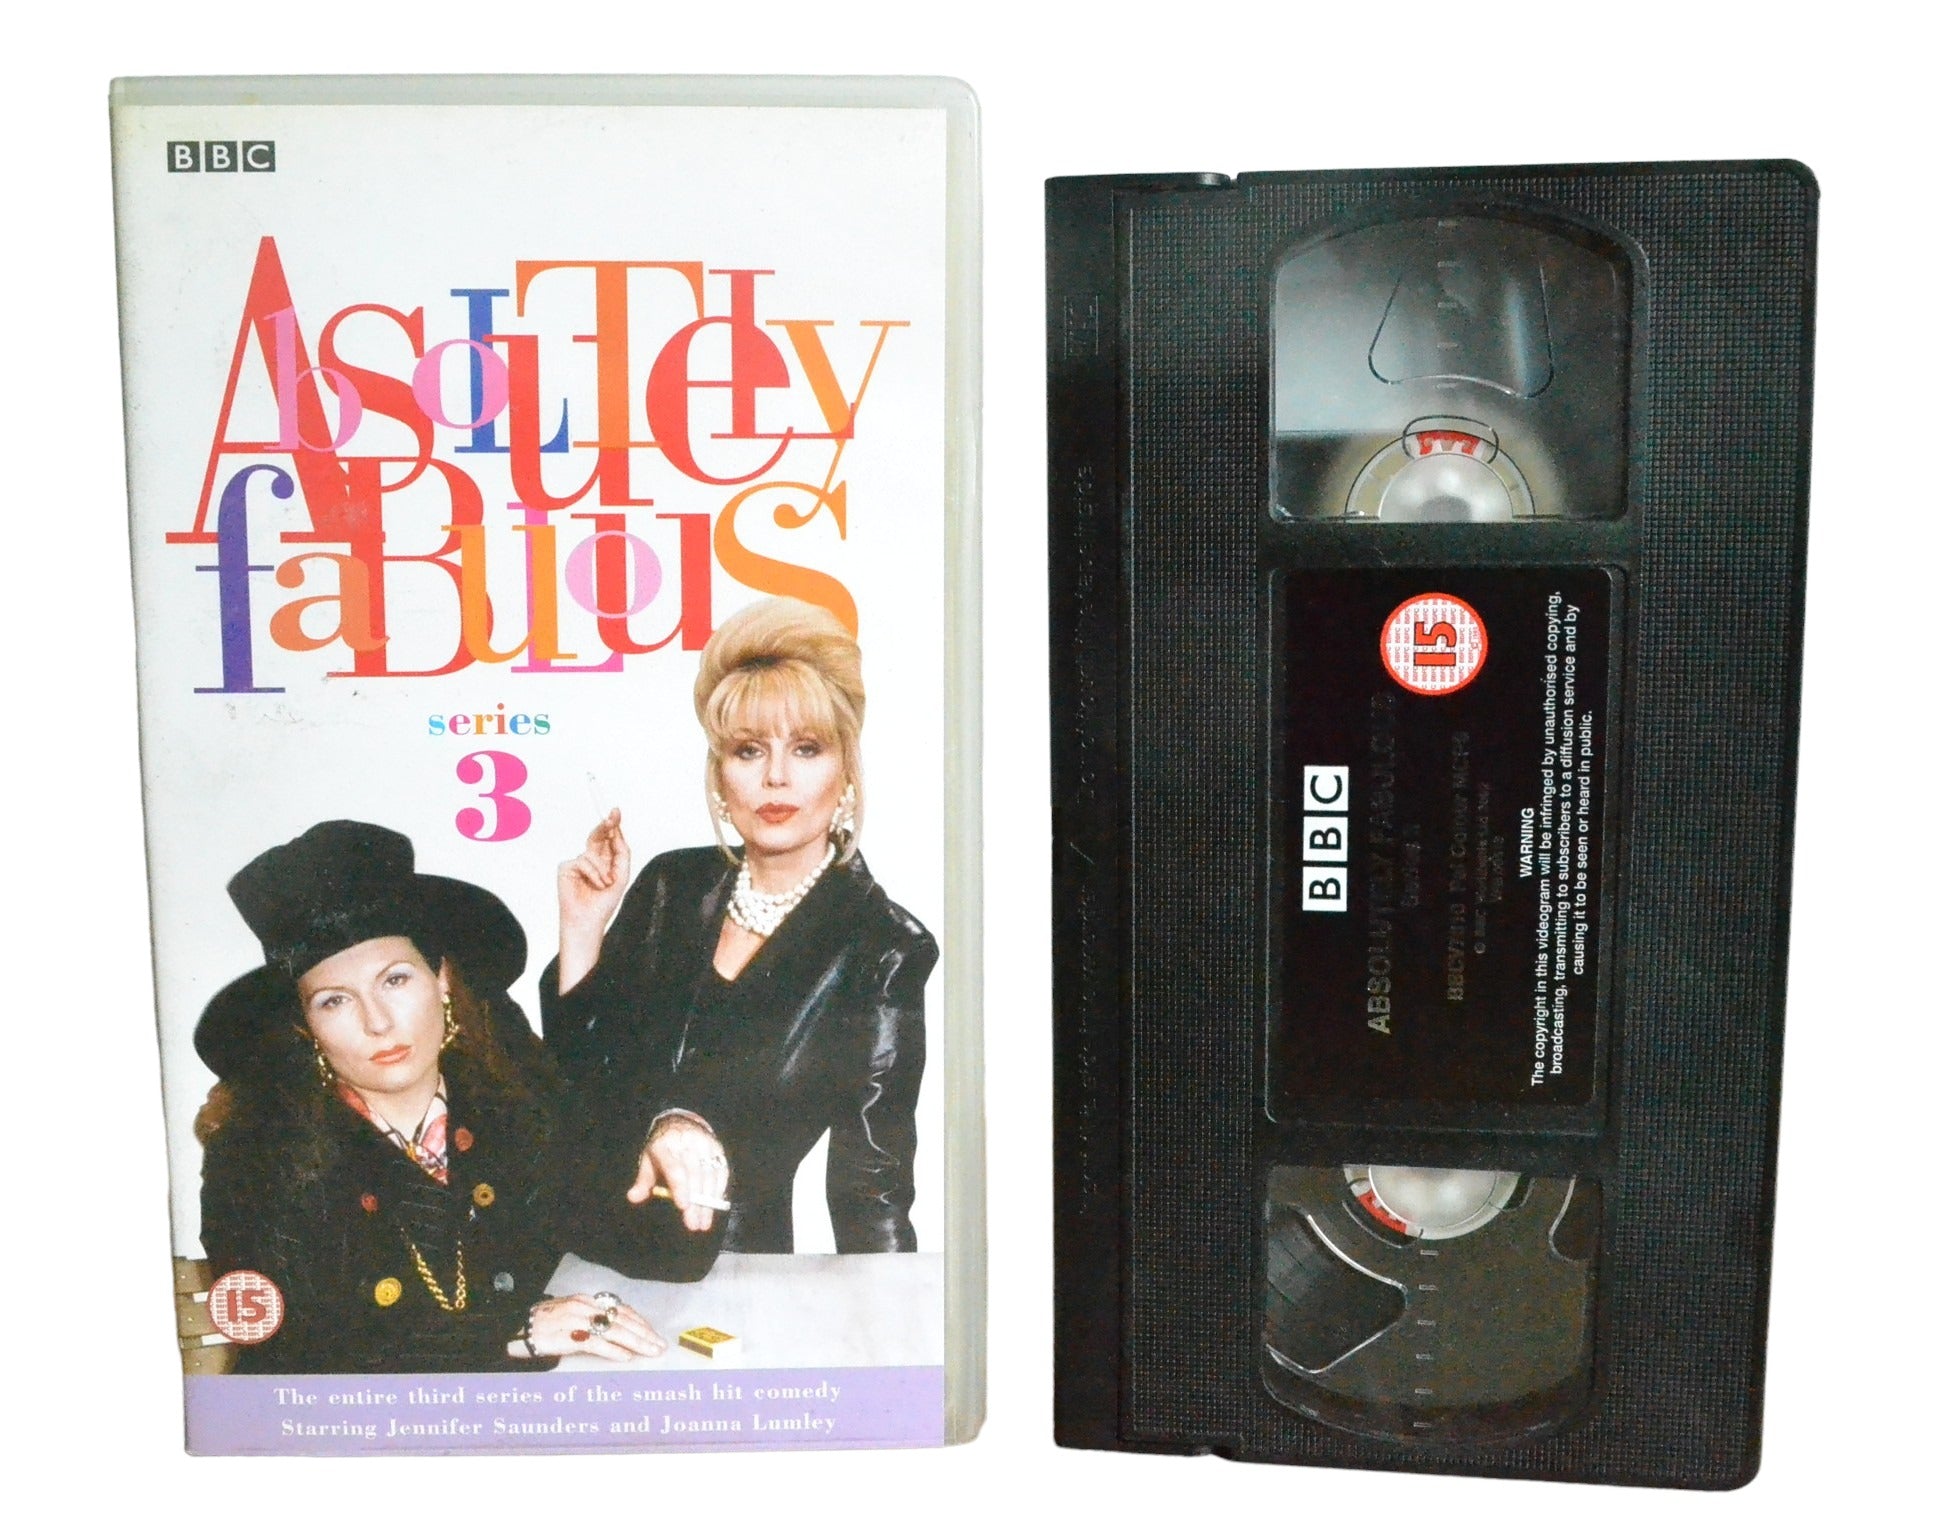 Absolutely Fabulous : Series 3 - Jennifer Saunders - BBC Video - BBCV7310 - Comedy - Pal - VHS-